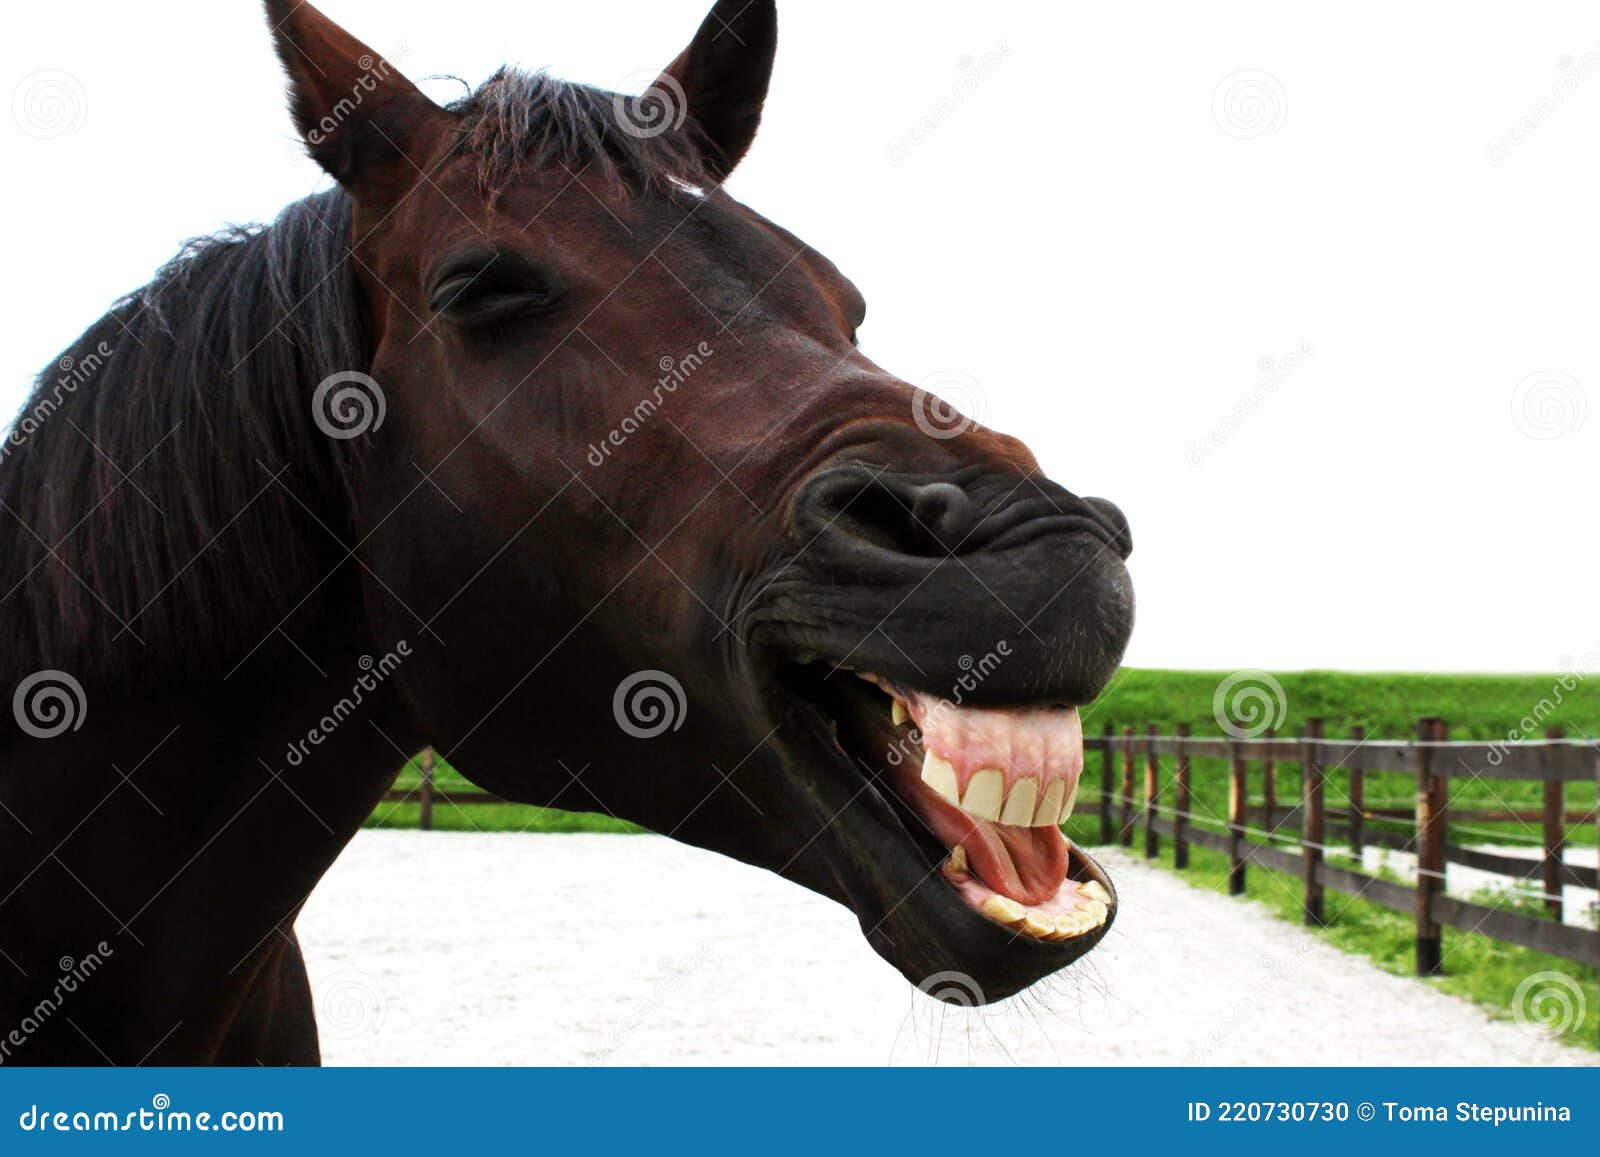 portrait-funny-horse-smiling-horse-portrait-funny-horse-horizontal-view-smiling-horse-cropped-shot-220730730.jpg